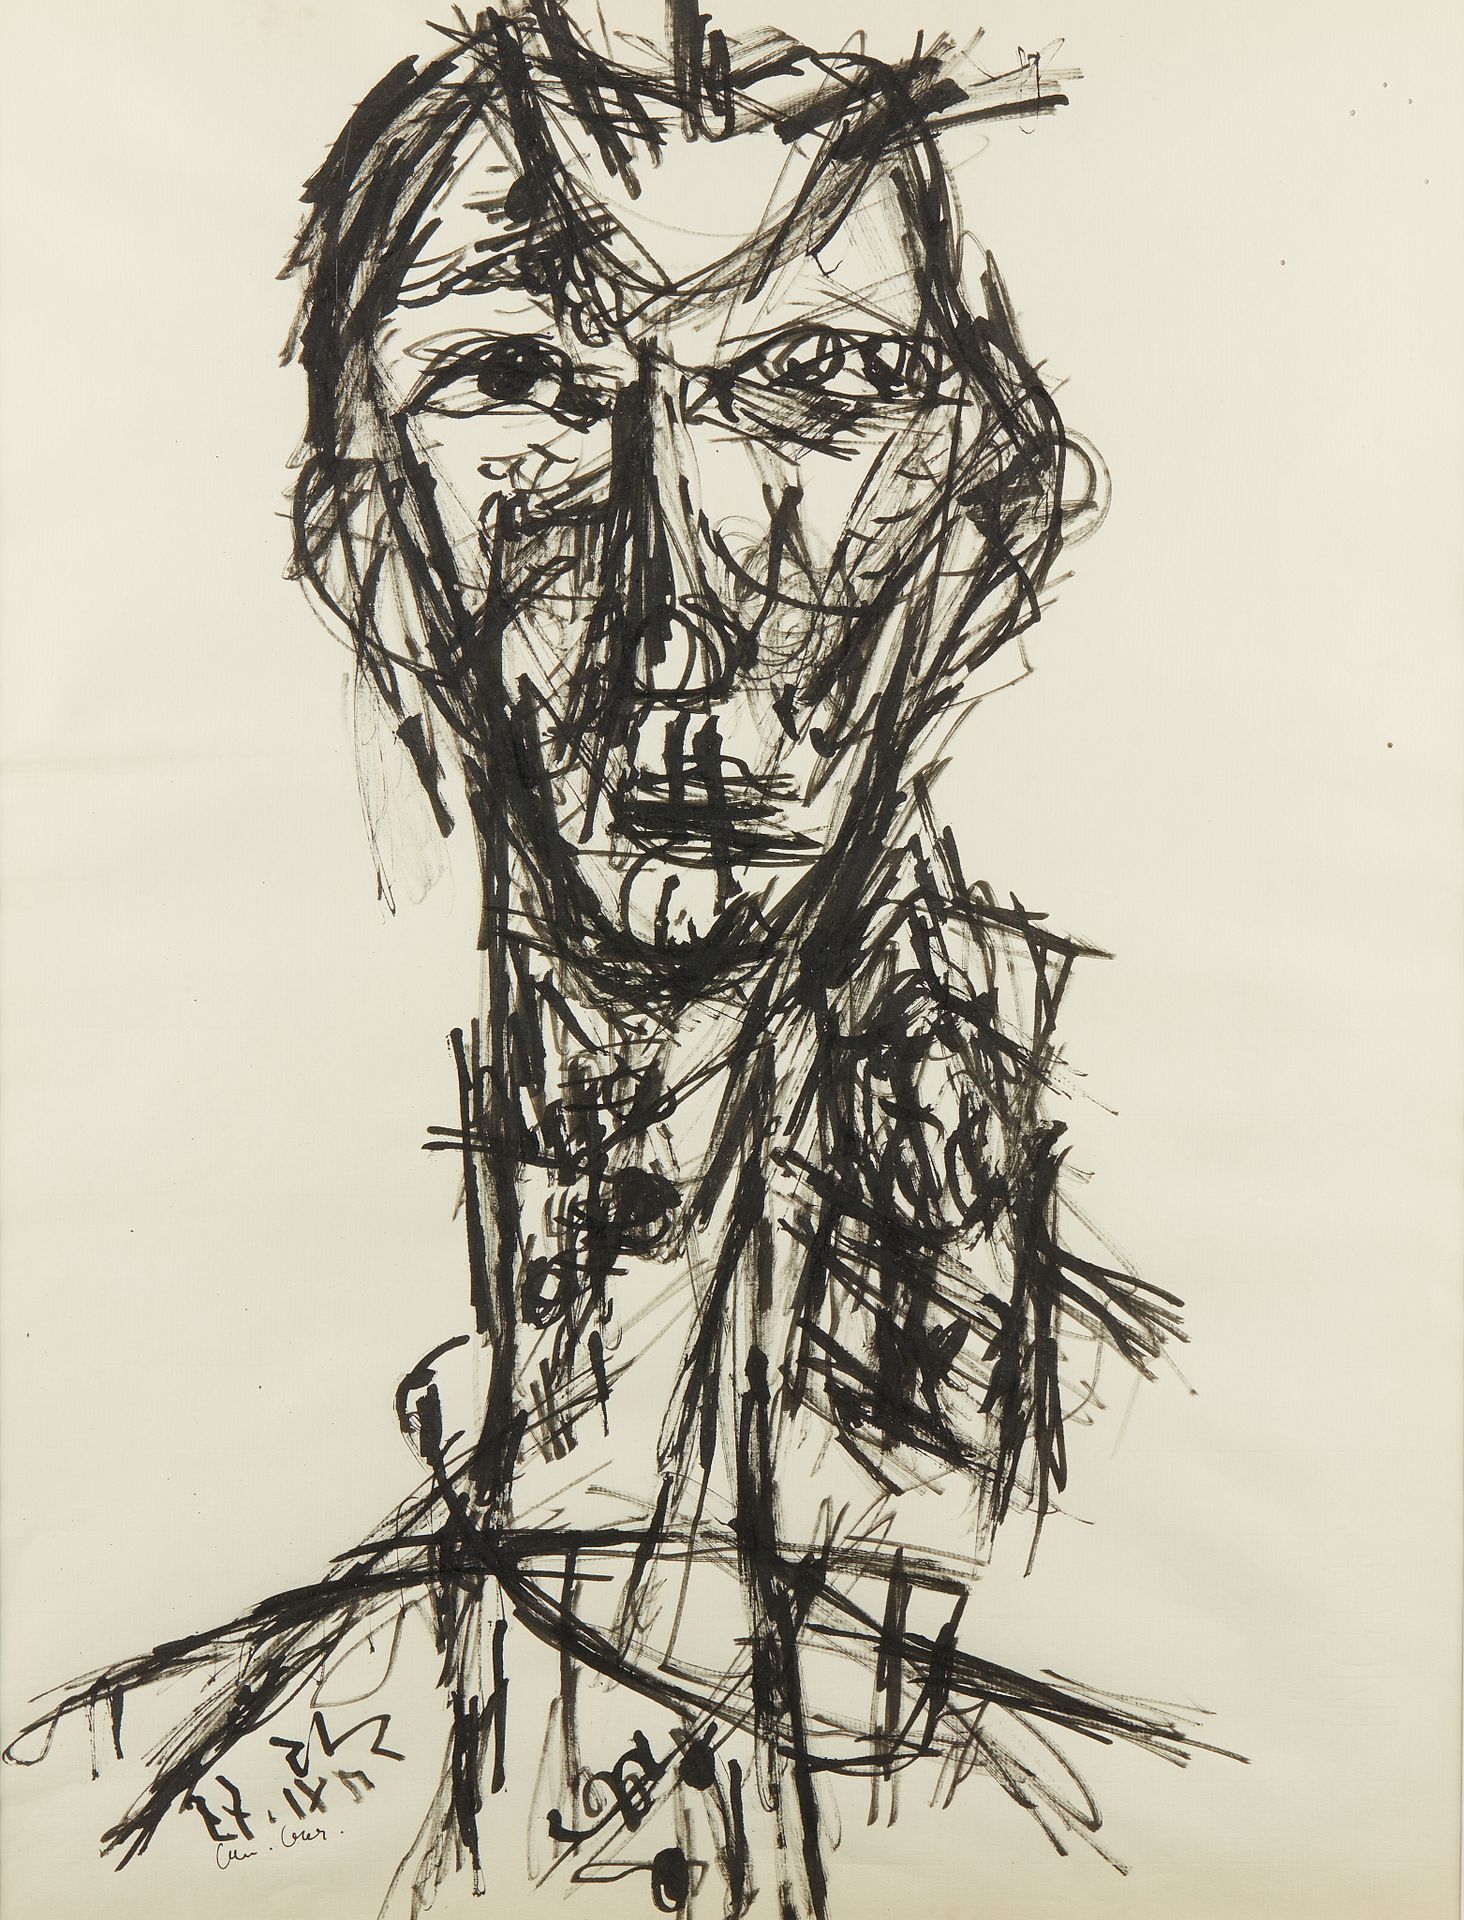 Null 大卫-兰-巴(1912-1987)

一个人的画像

纸上水墨

左下方有签名和日期

60 x 46 厘米

(划痕)